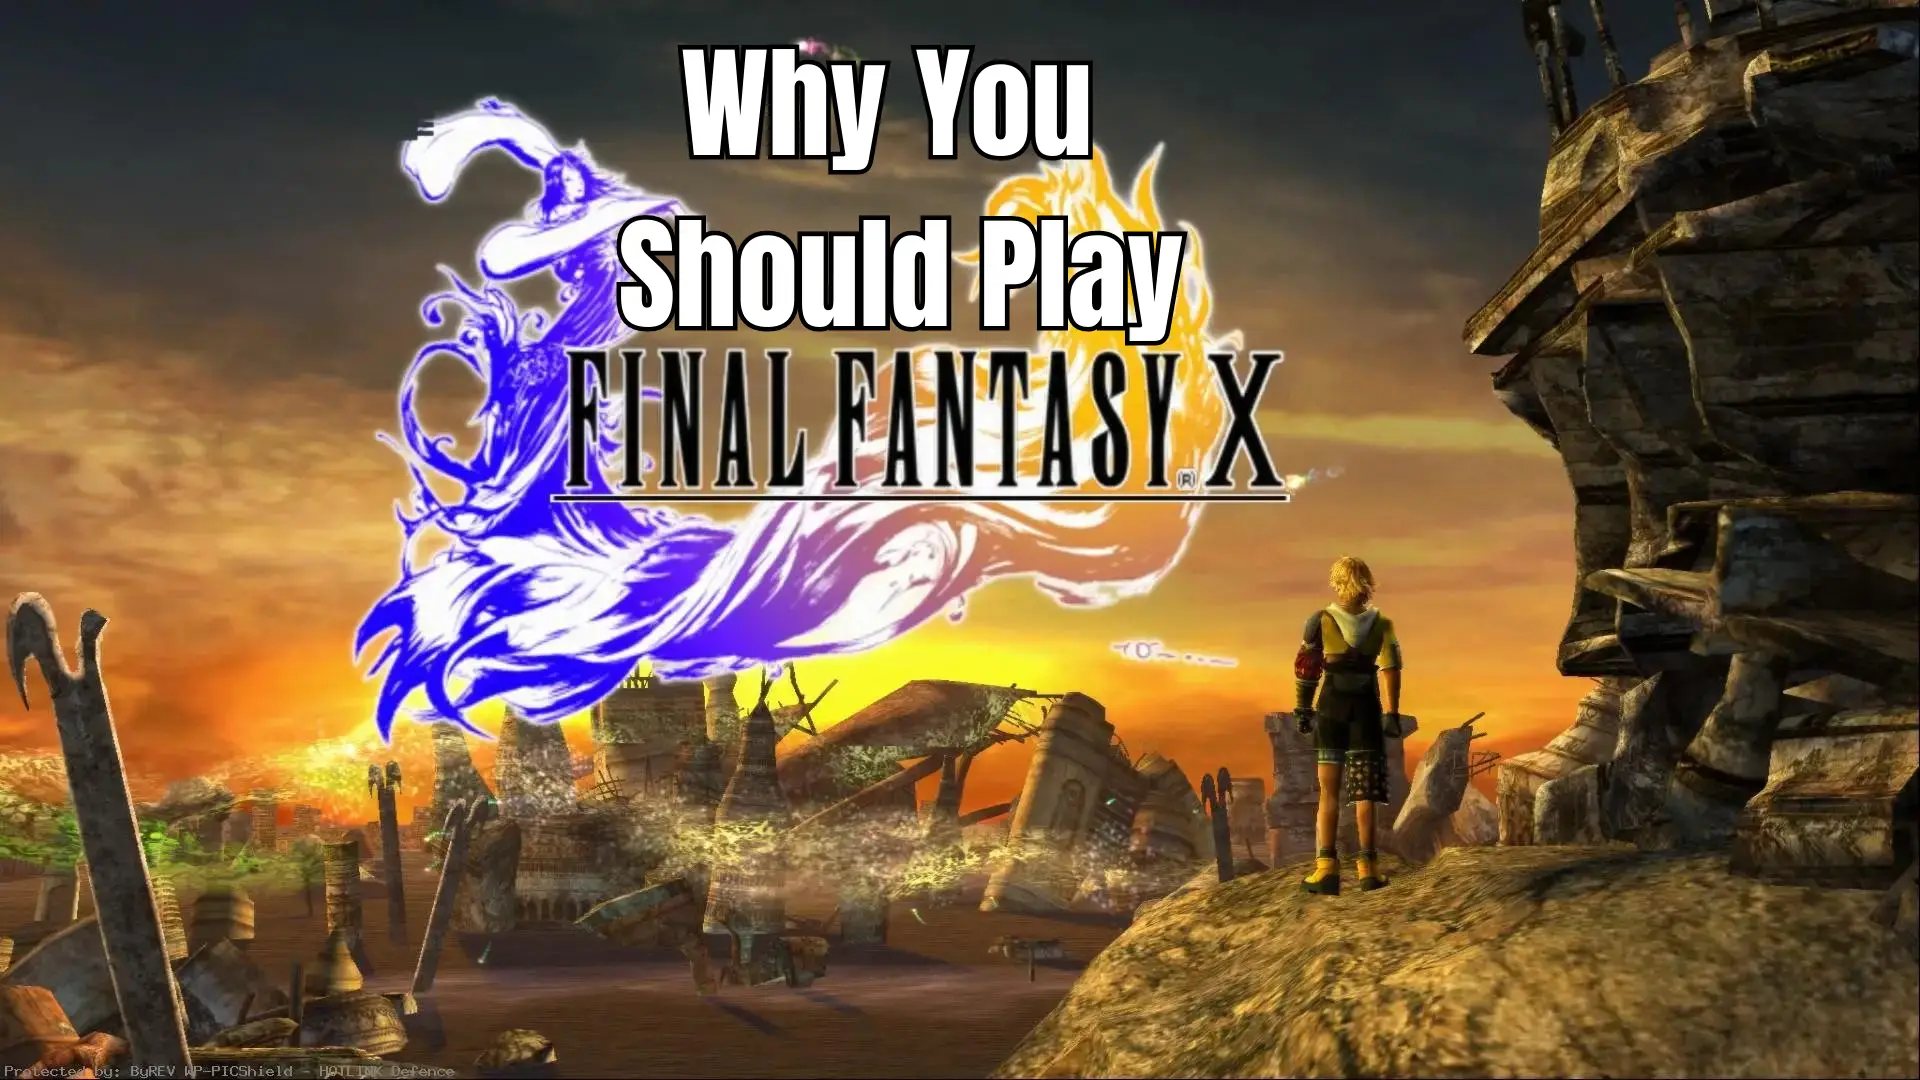 Final Fantasy X - Cover